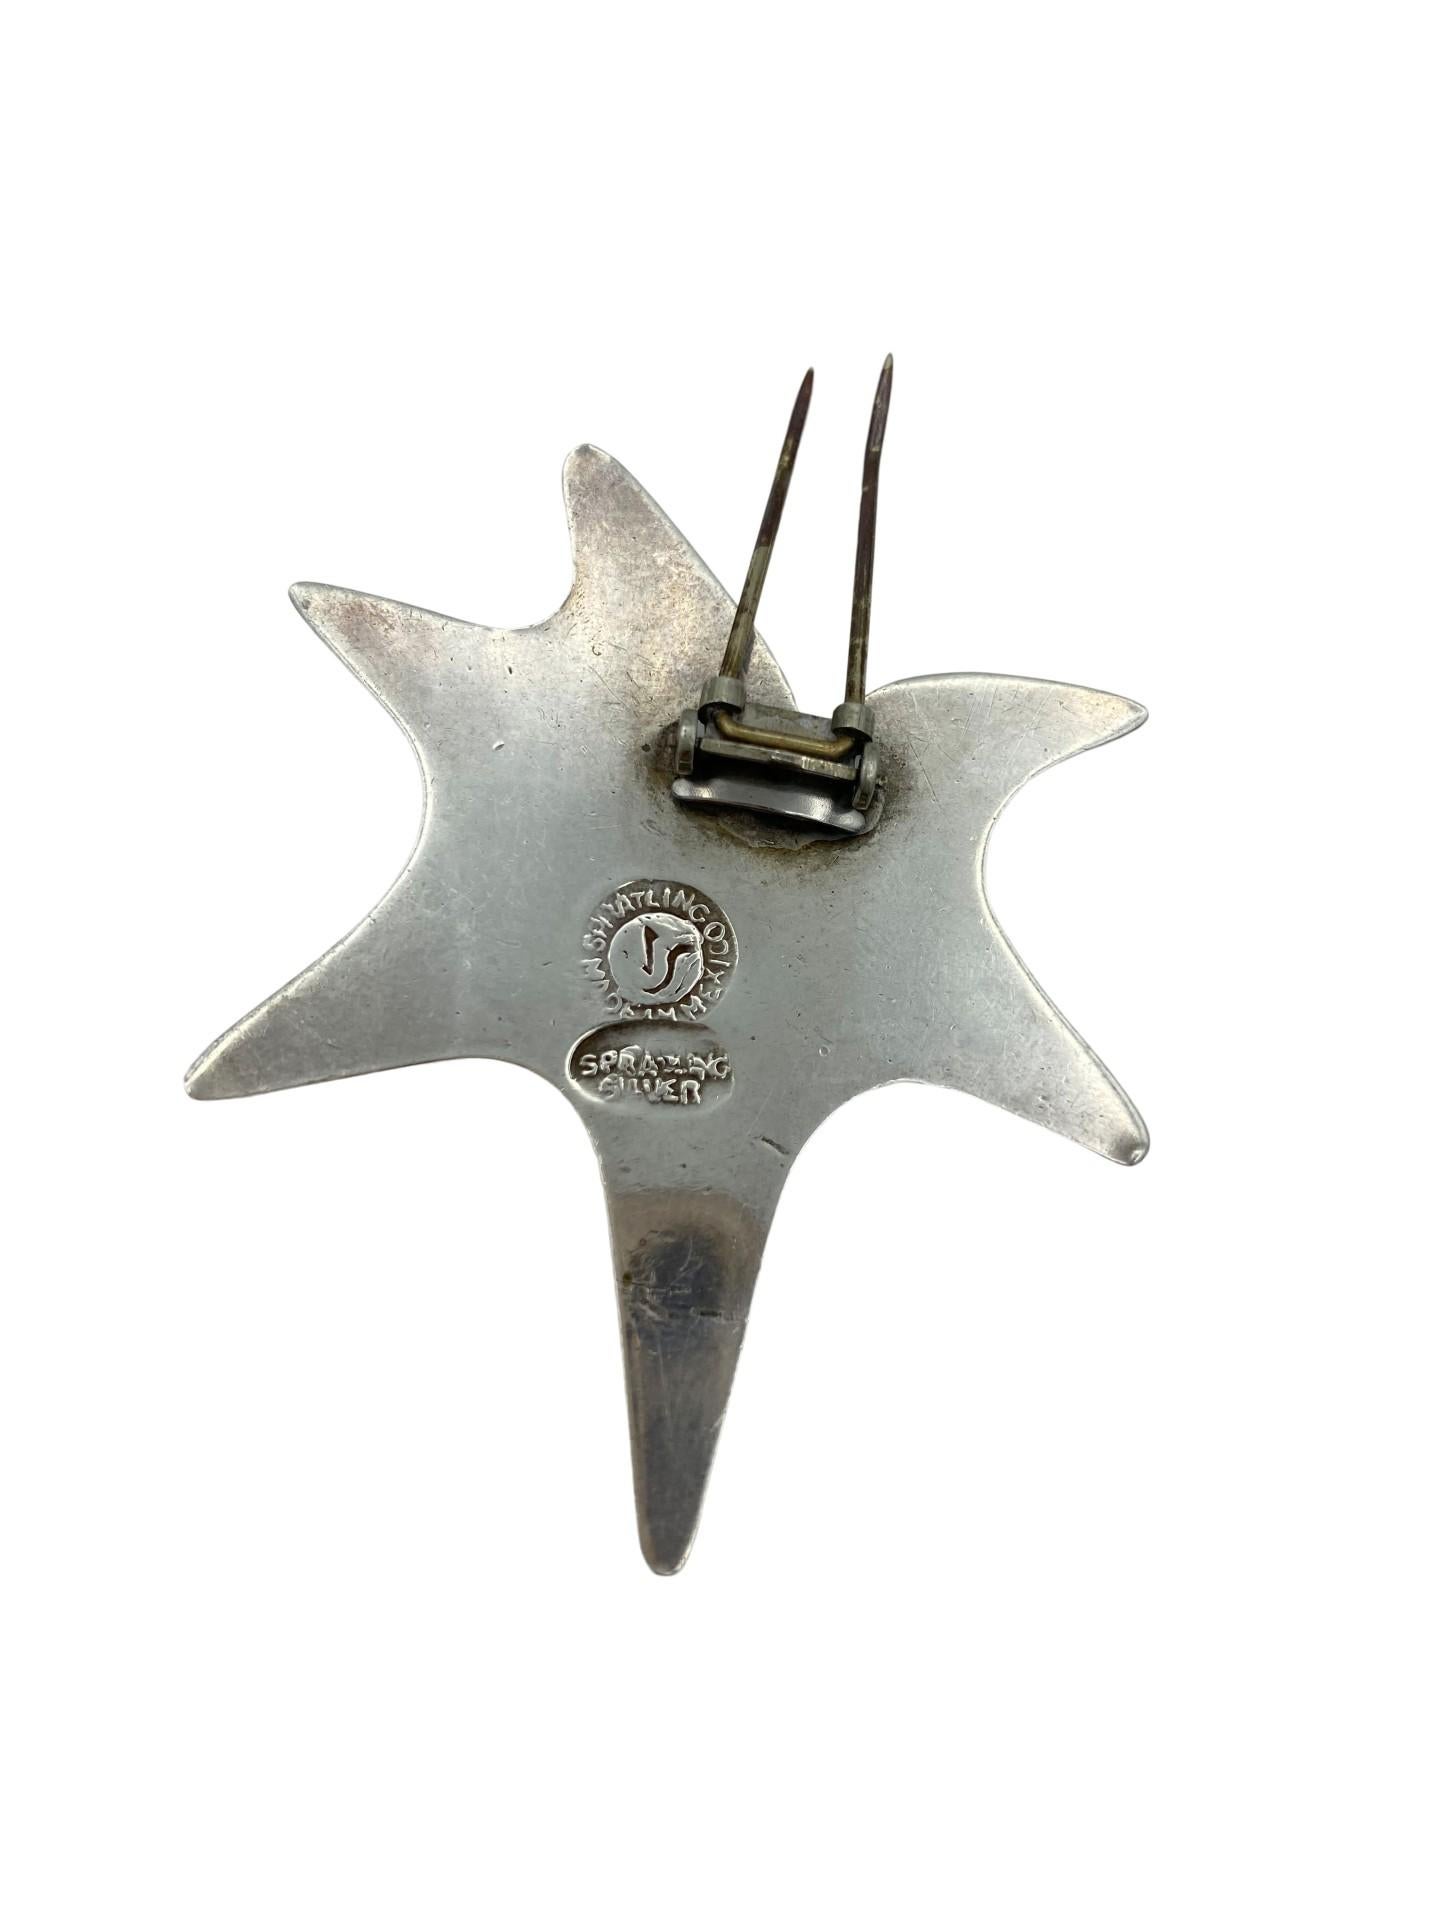 Women's William Spratling Conch Shell Earrings Pin Brooch Set 980 Silver Vintage Taxco For Sale